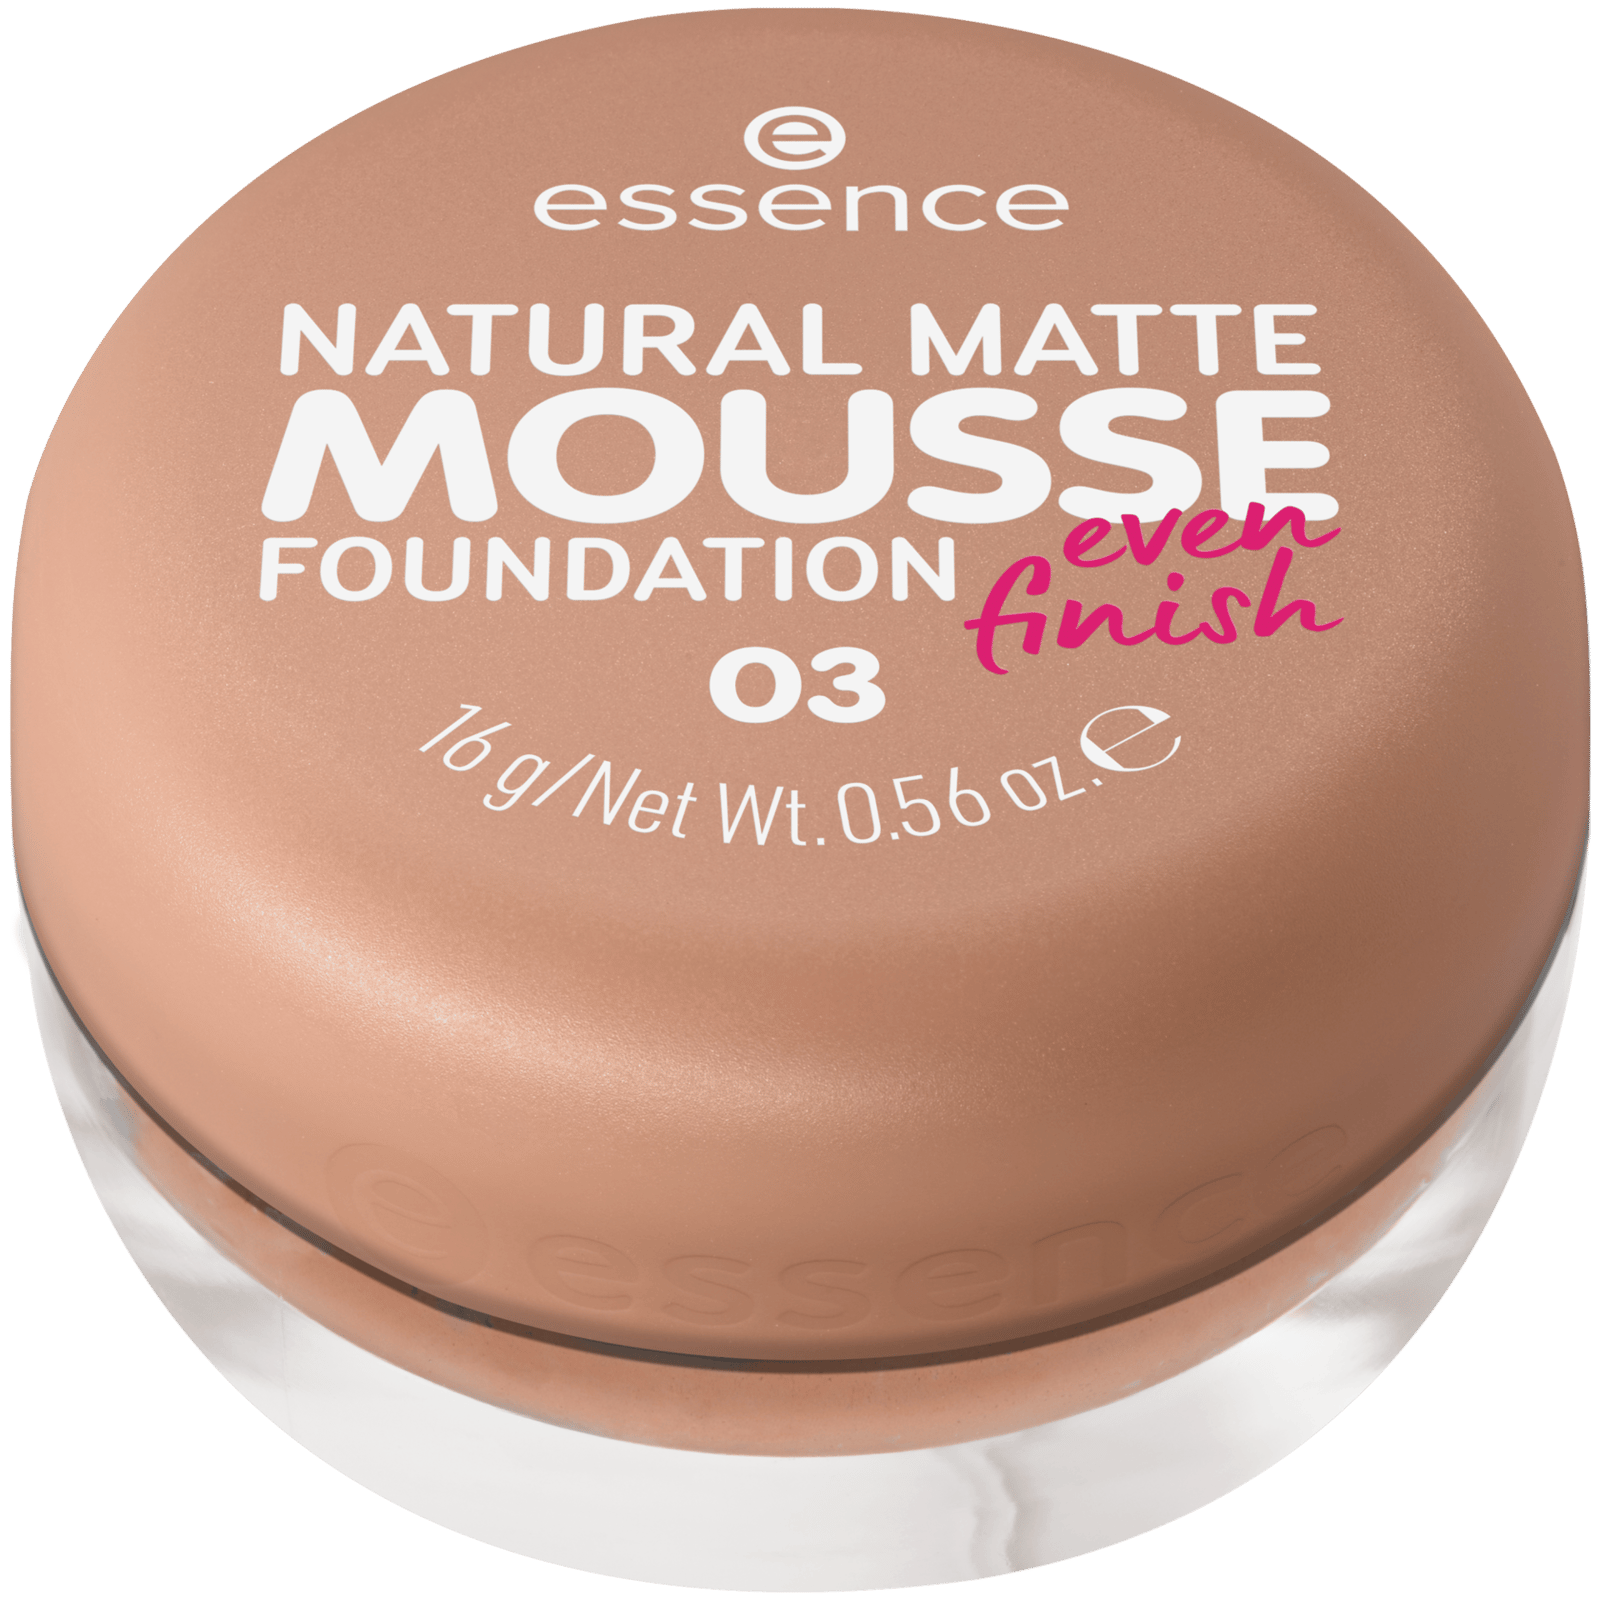 essence Natural Matte Mousse 03 Foundation 16g